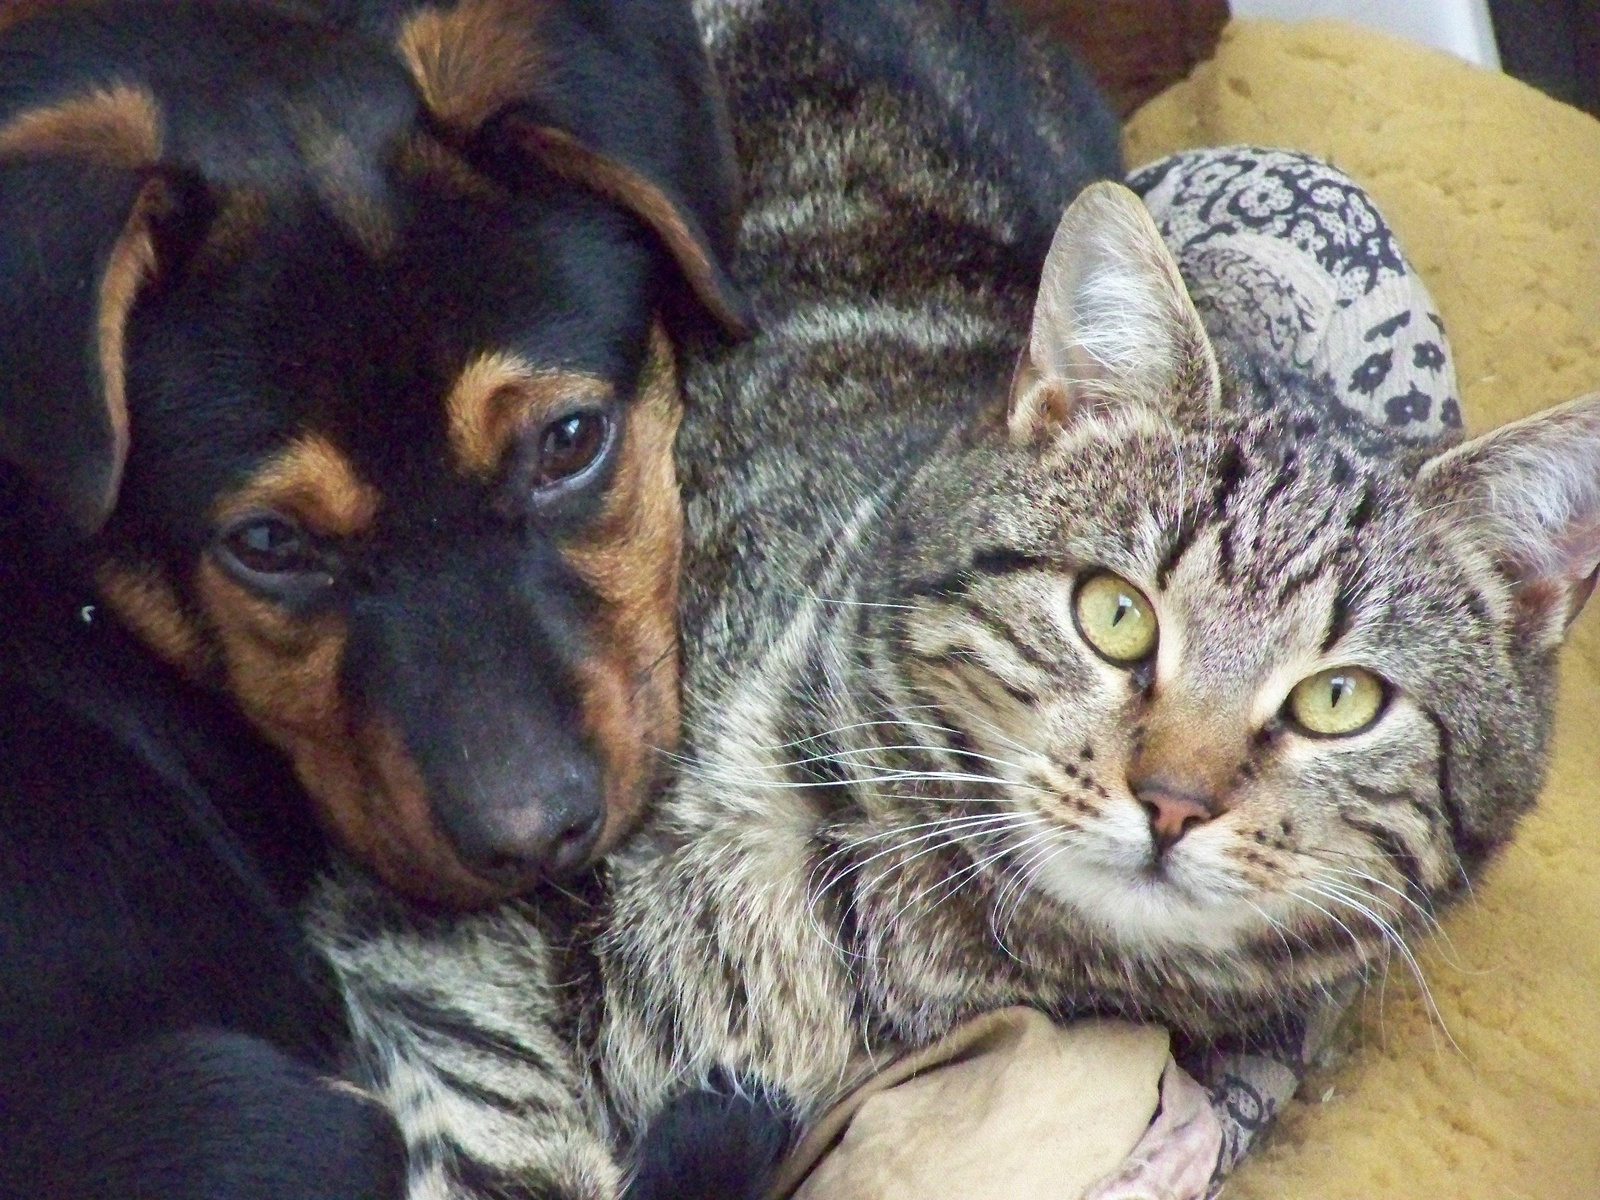 Kutya-macska barátság